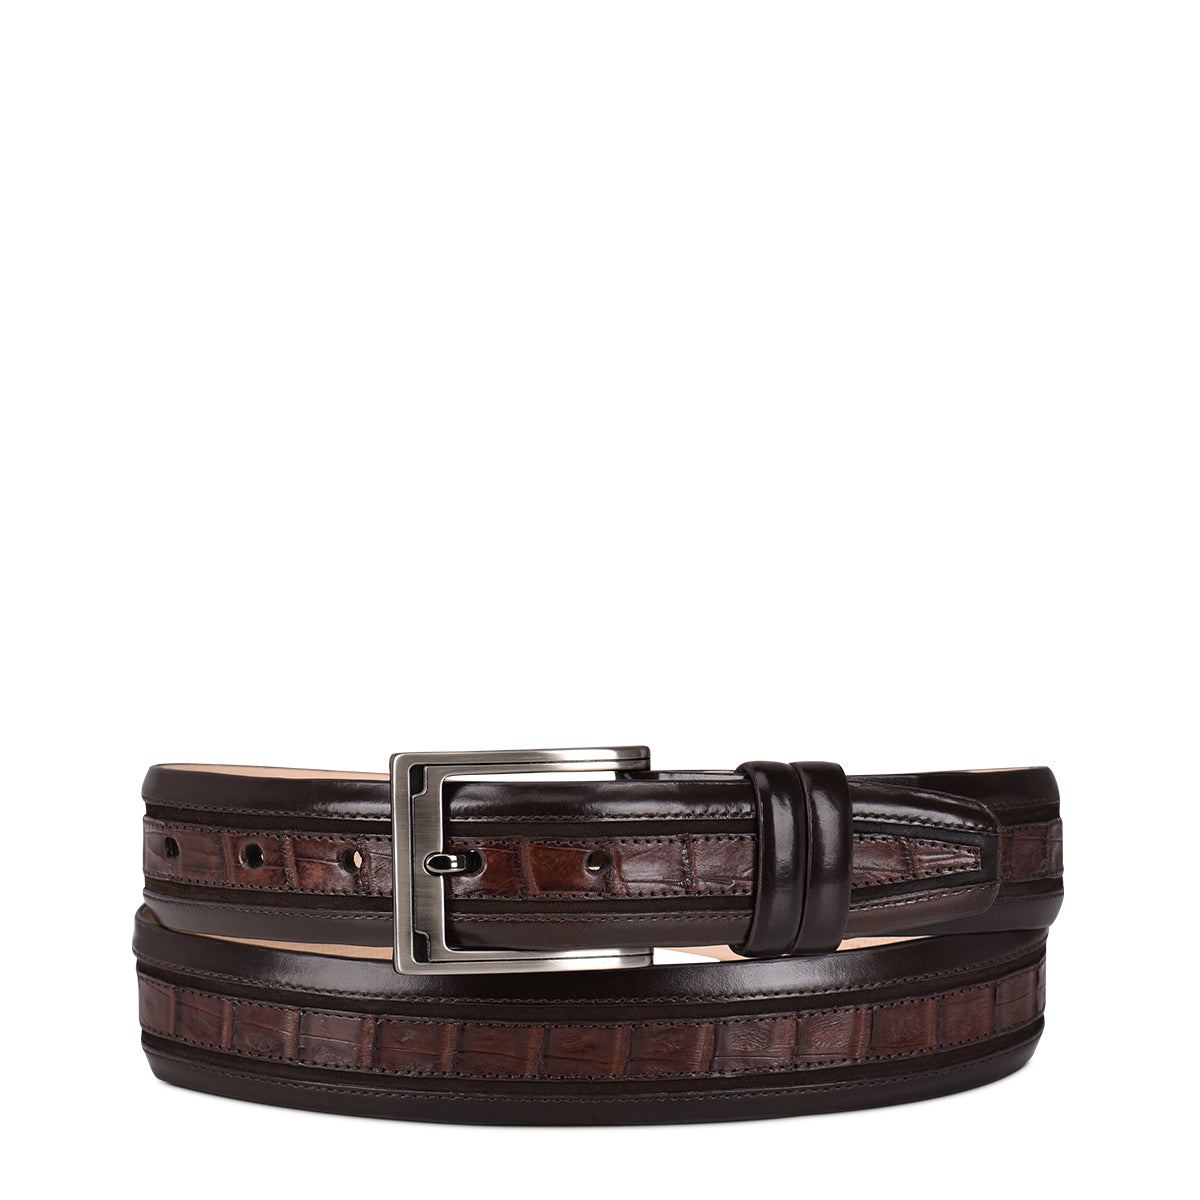 Dark brown formal exotic leather belt